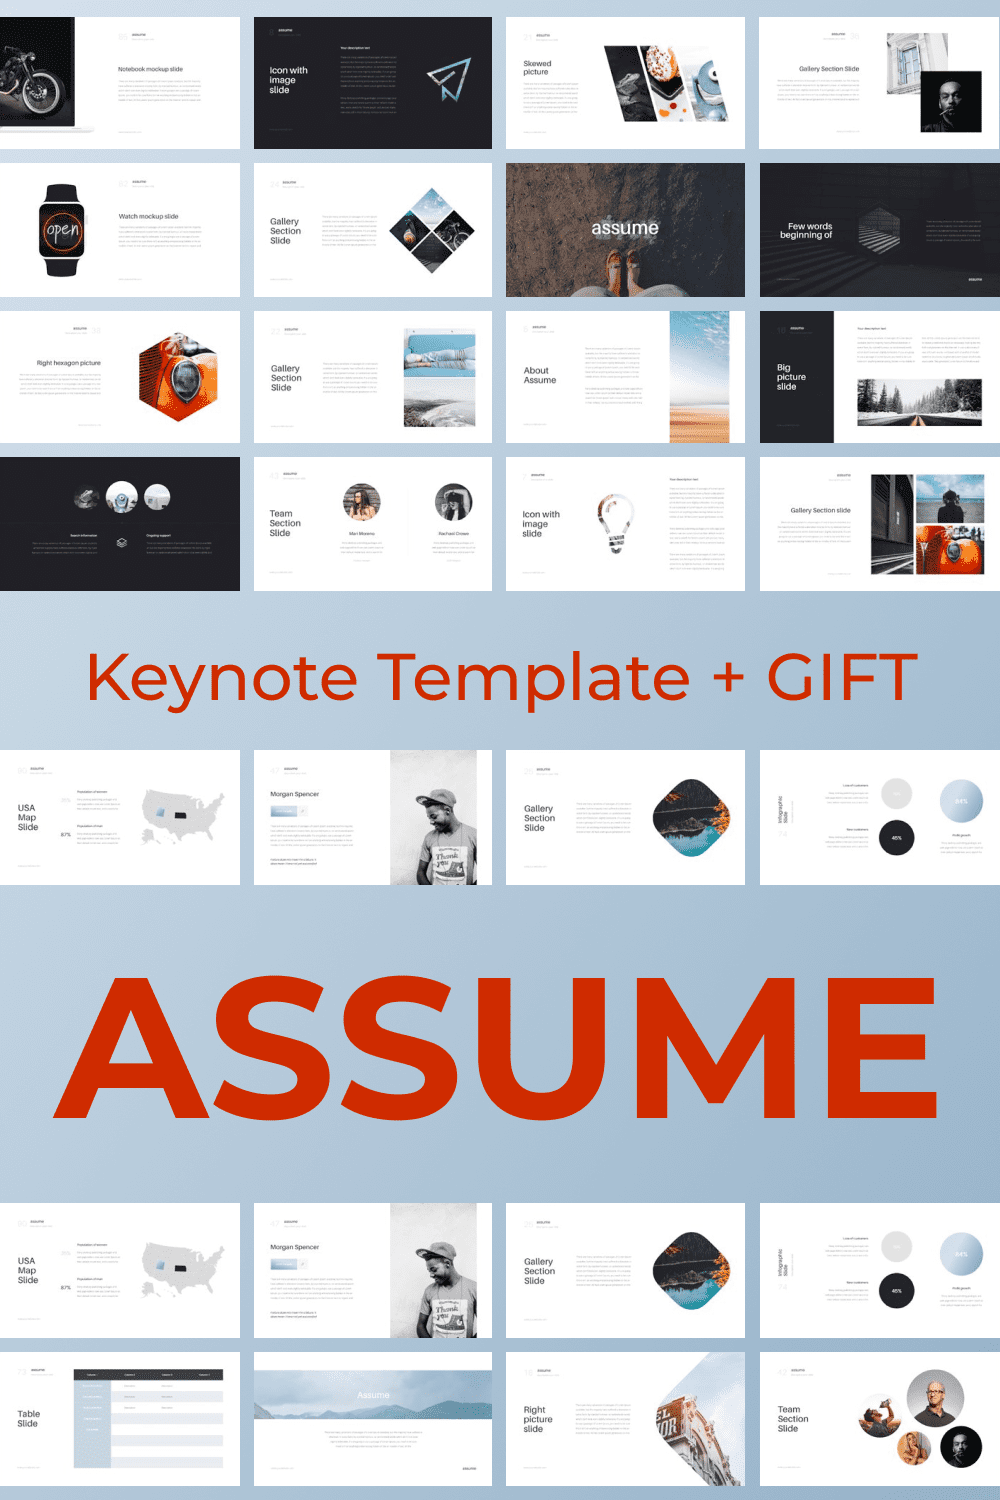 Assume Keynote Template - Pinterest.